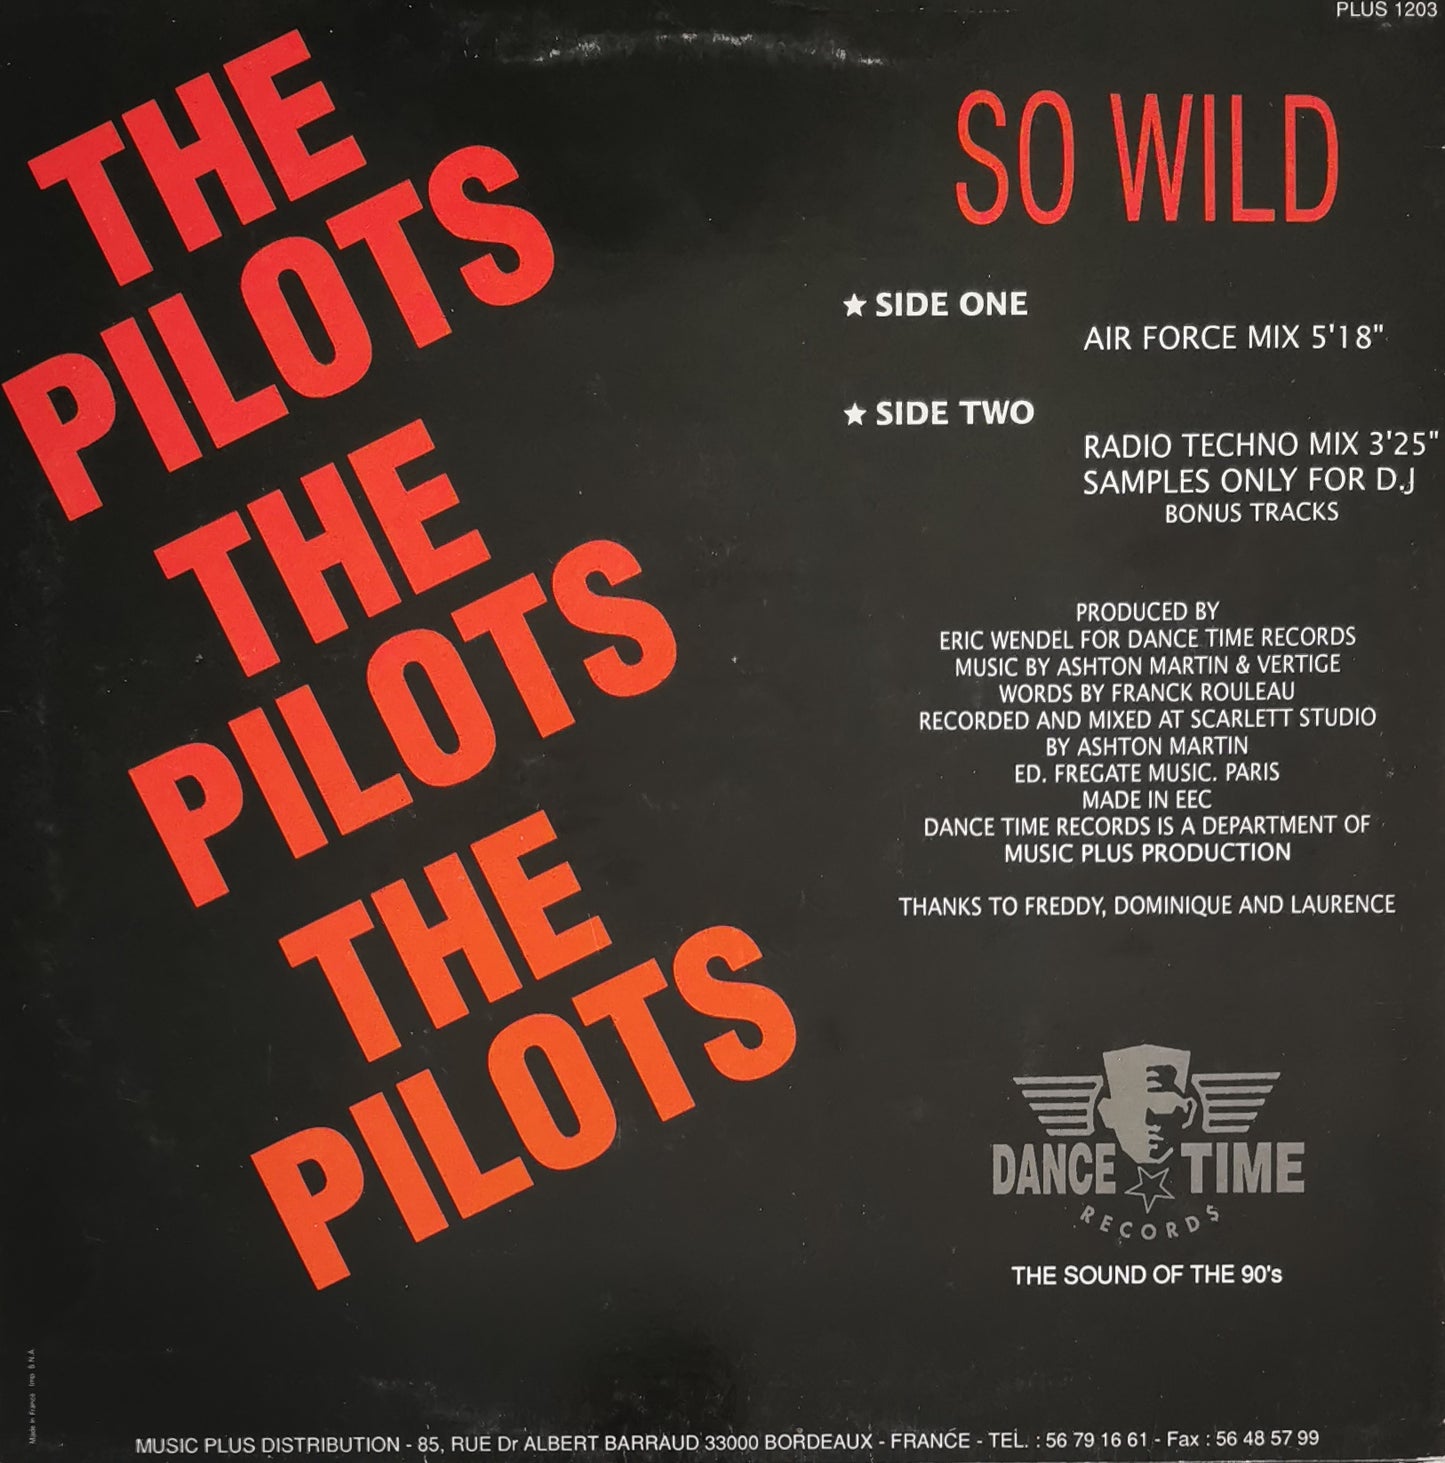 THE PILOTS - So Wild (Techno Mix)